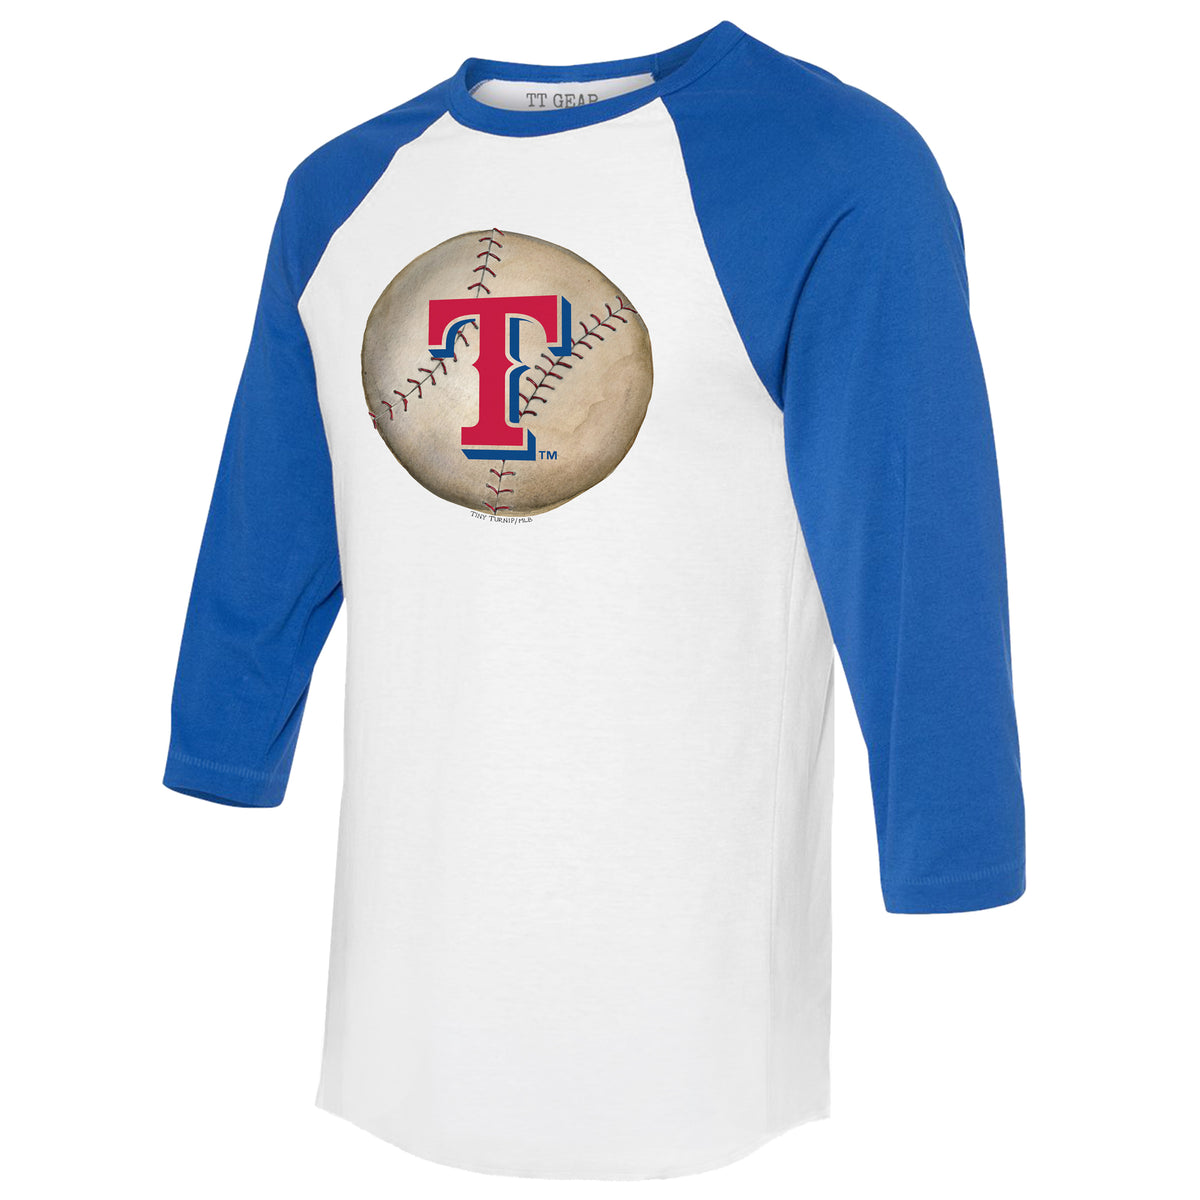 TinyTurnip Texas Rangers Baseball Love 3/4 Royal Blue Sleeve Raglan Youth Medium (8-10)